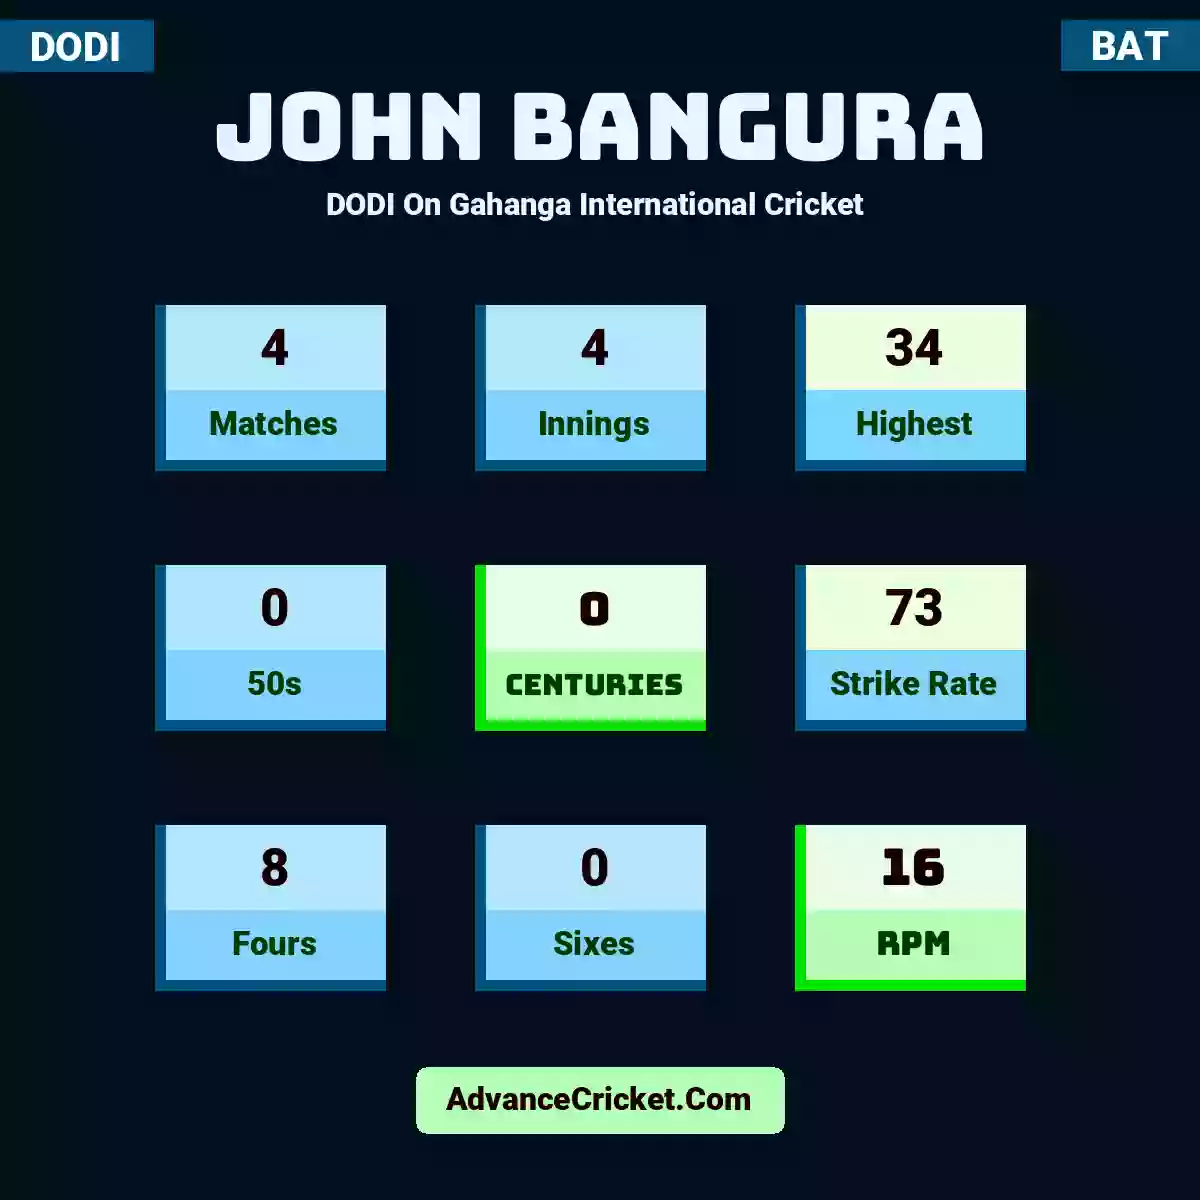 John Bangura DODI  On Gahanga International Cricket , John Bangura played 4 matches, scored 34 runs as highest, 0 half-centuries, and 0 centuries, with a strike rate of 73. J.Bangura hit 8 fours and 0 sixes, with an RPM of 16.